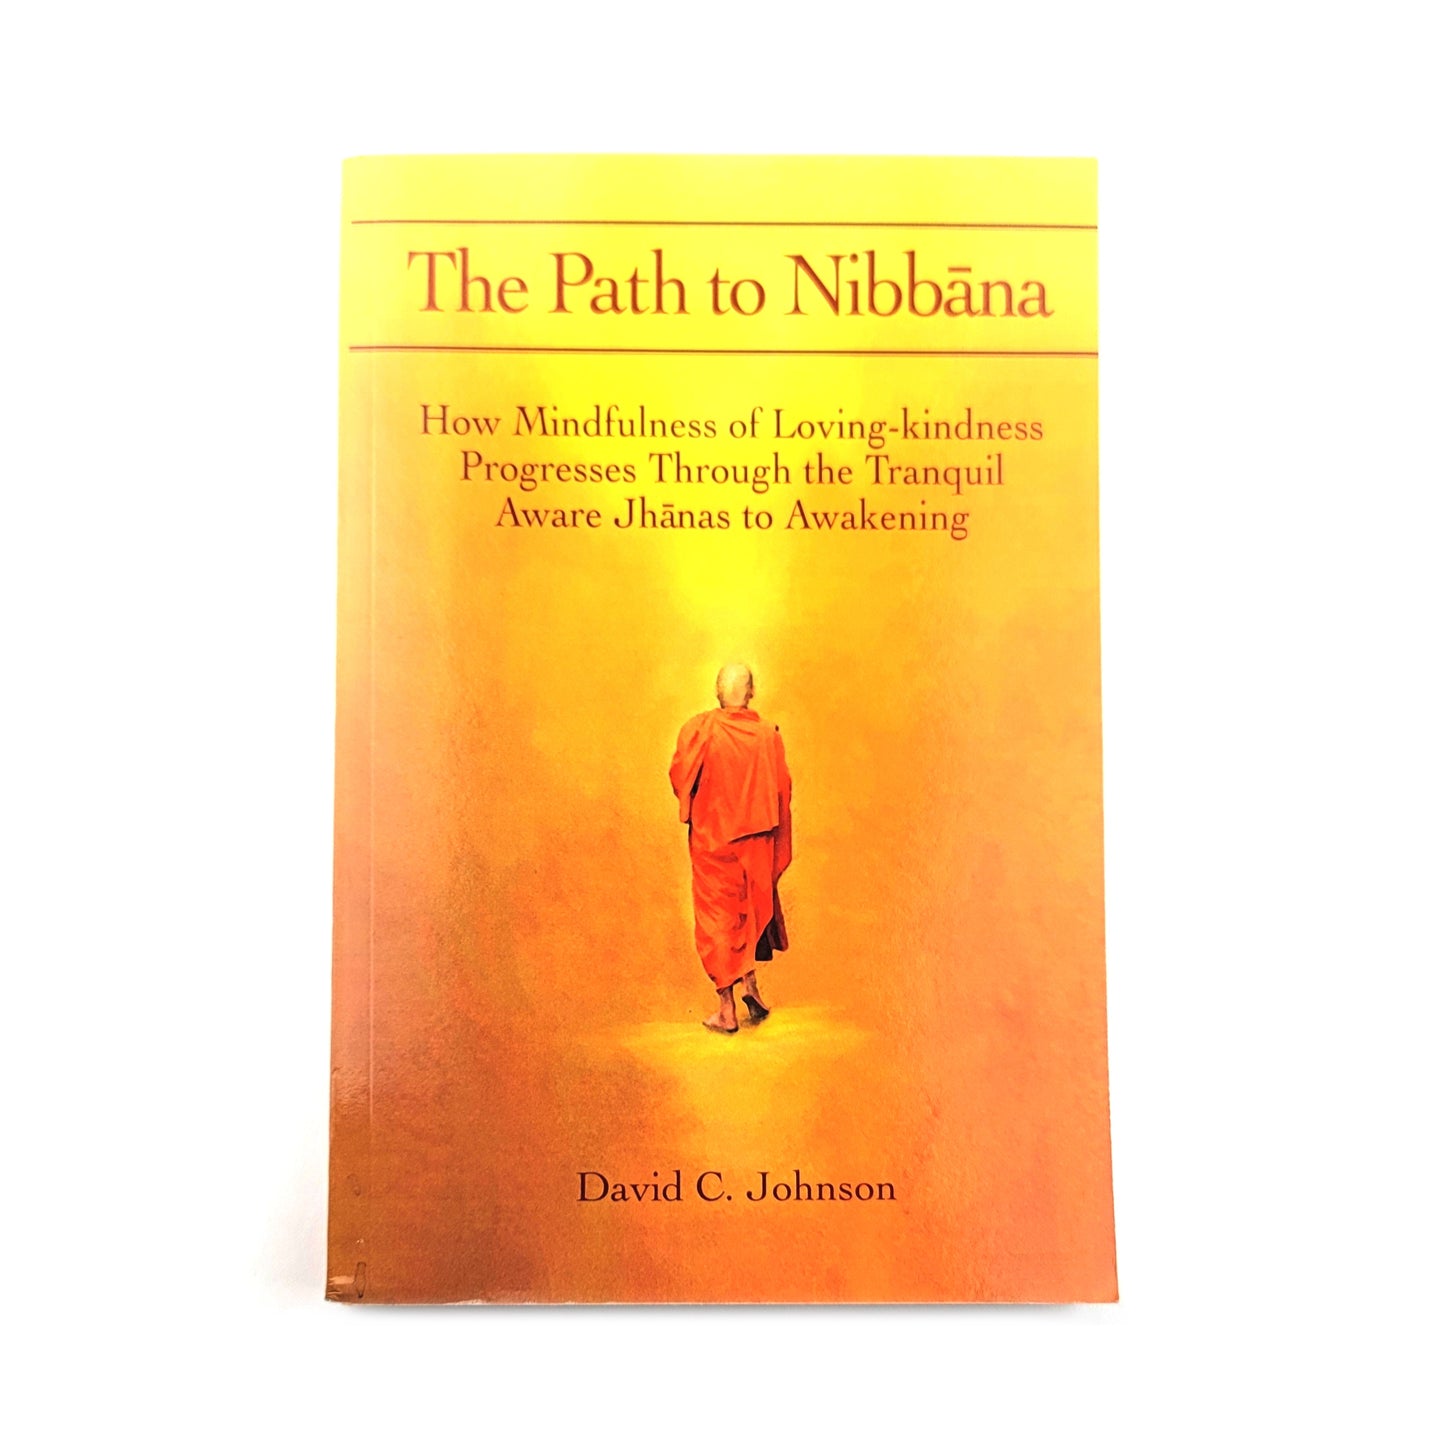 The Path to Nibbana: How Mindfulness of Loving-Kindness Progresses through the Tranquil Aware Jhanas to Awakening by David C Johnson